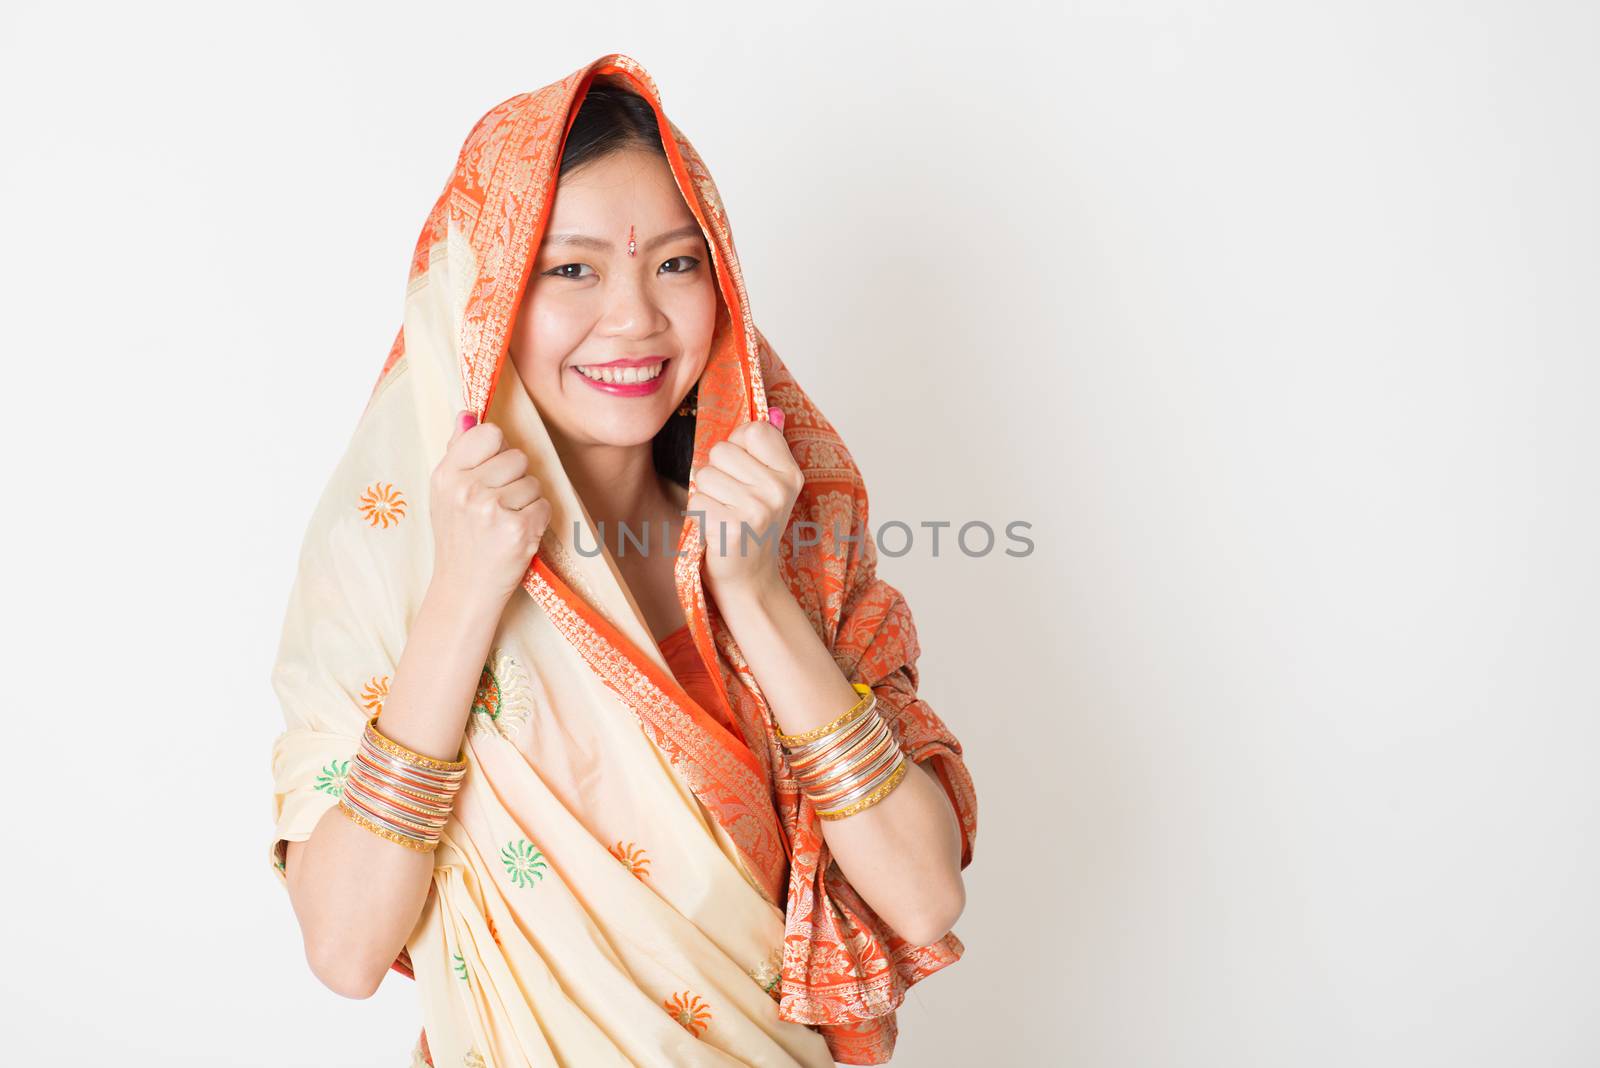 Young girl in Indian sari dress by szefei